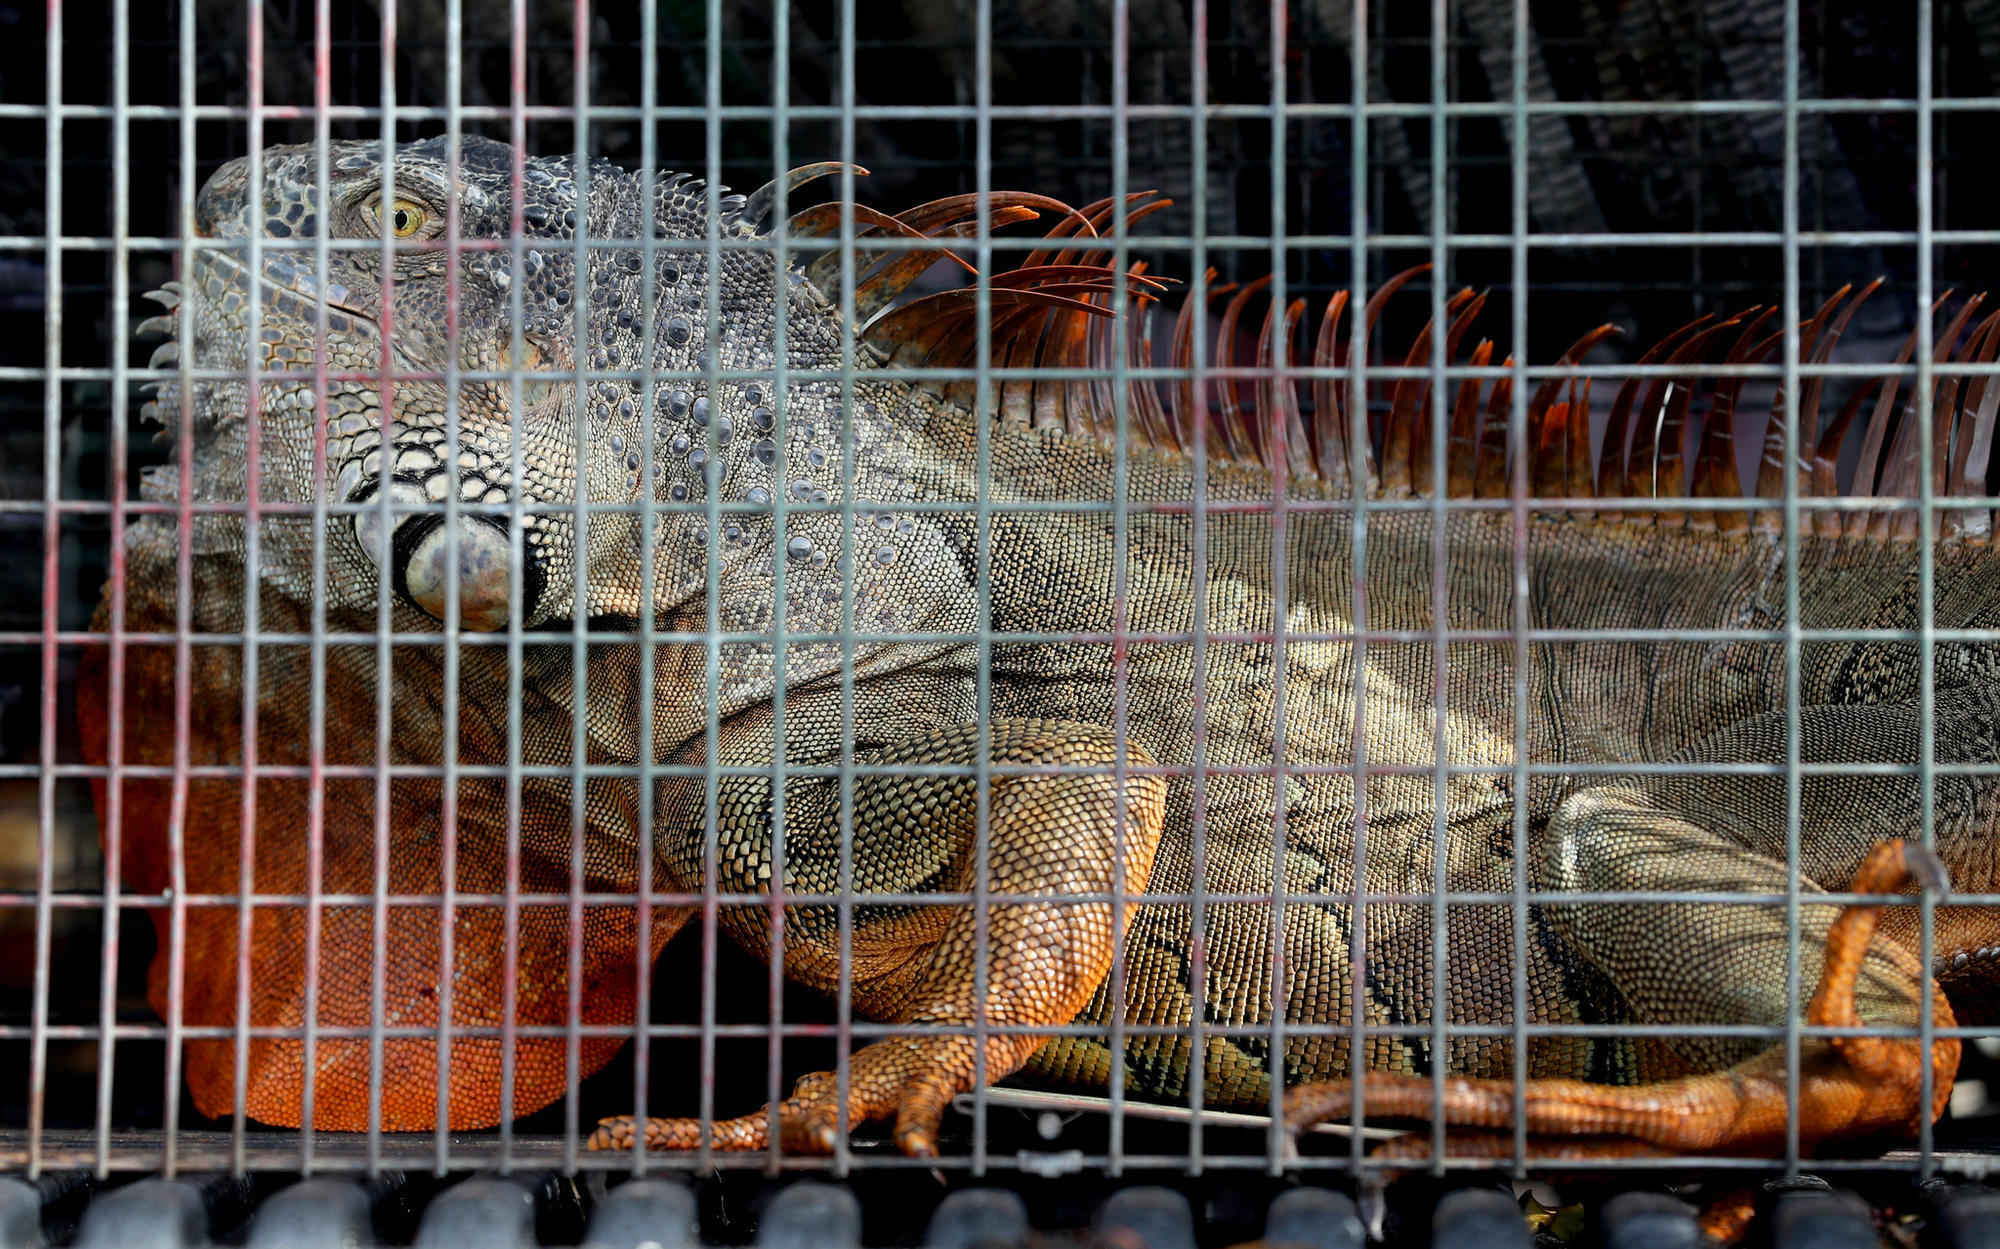 How to kill an iguana (legally) - Sun Sentinel2000 x 1249